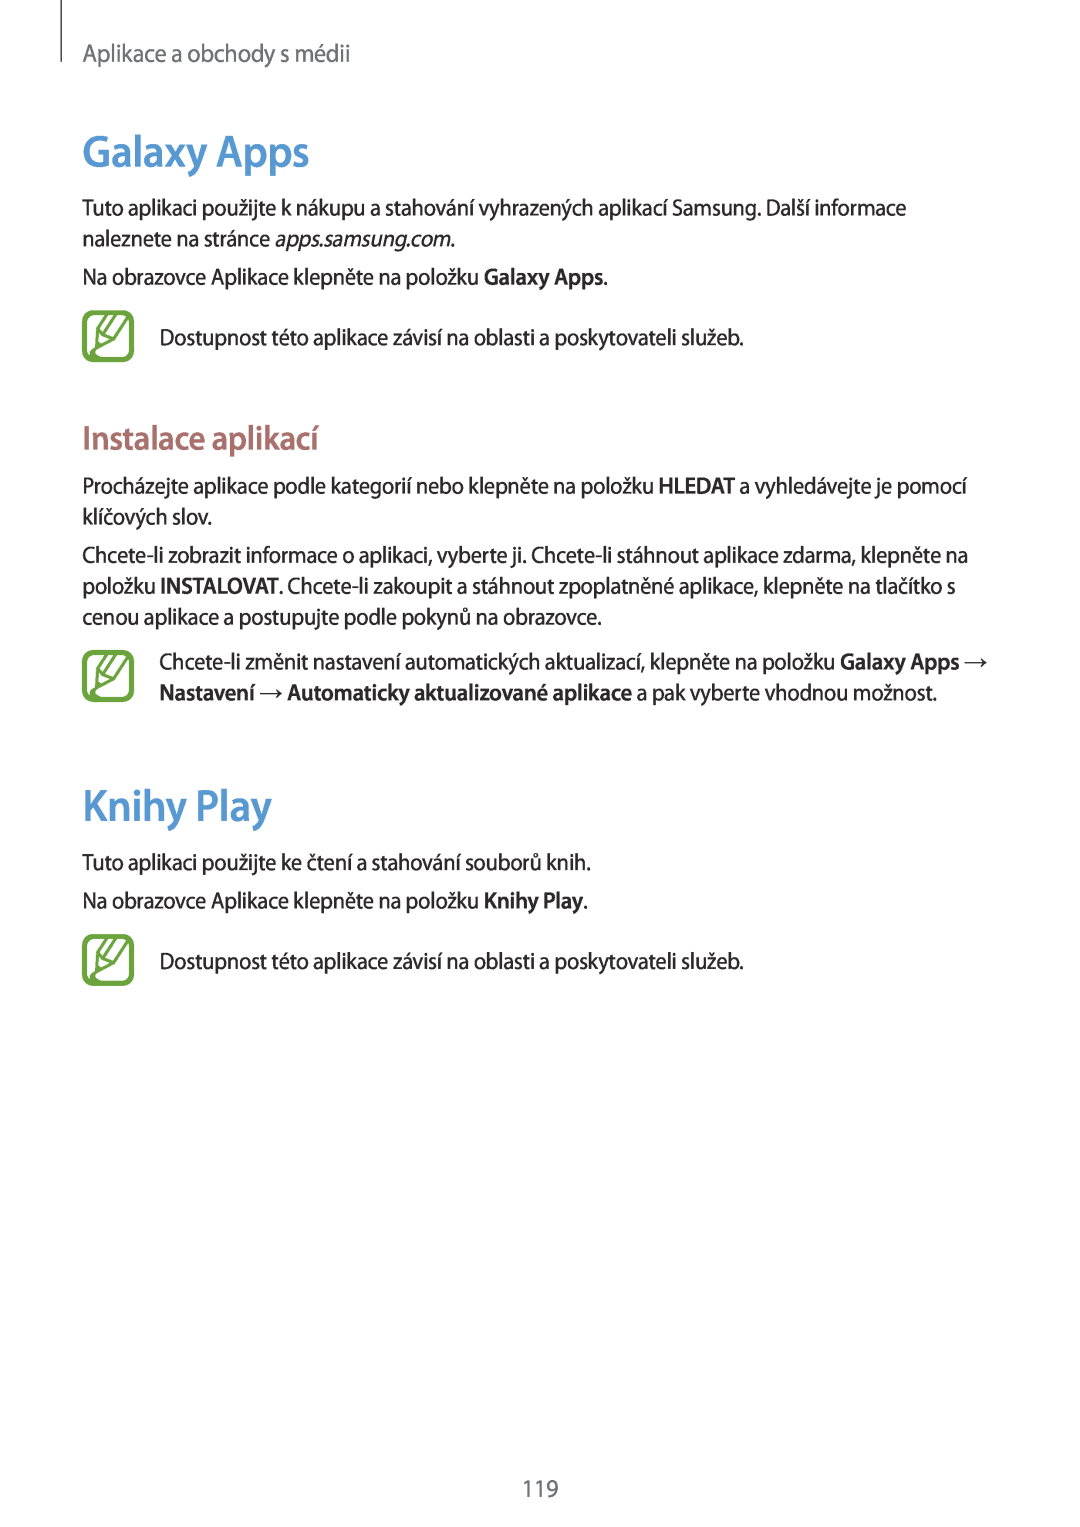 Samsung SM-P9050ZKAXEH, SM-P9050ZWAATO manual Galaxy Apps, Knihy Play, Aplikace a obchody s médii, Instalace aplikací 